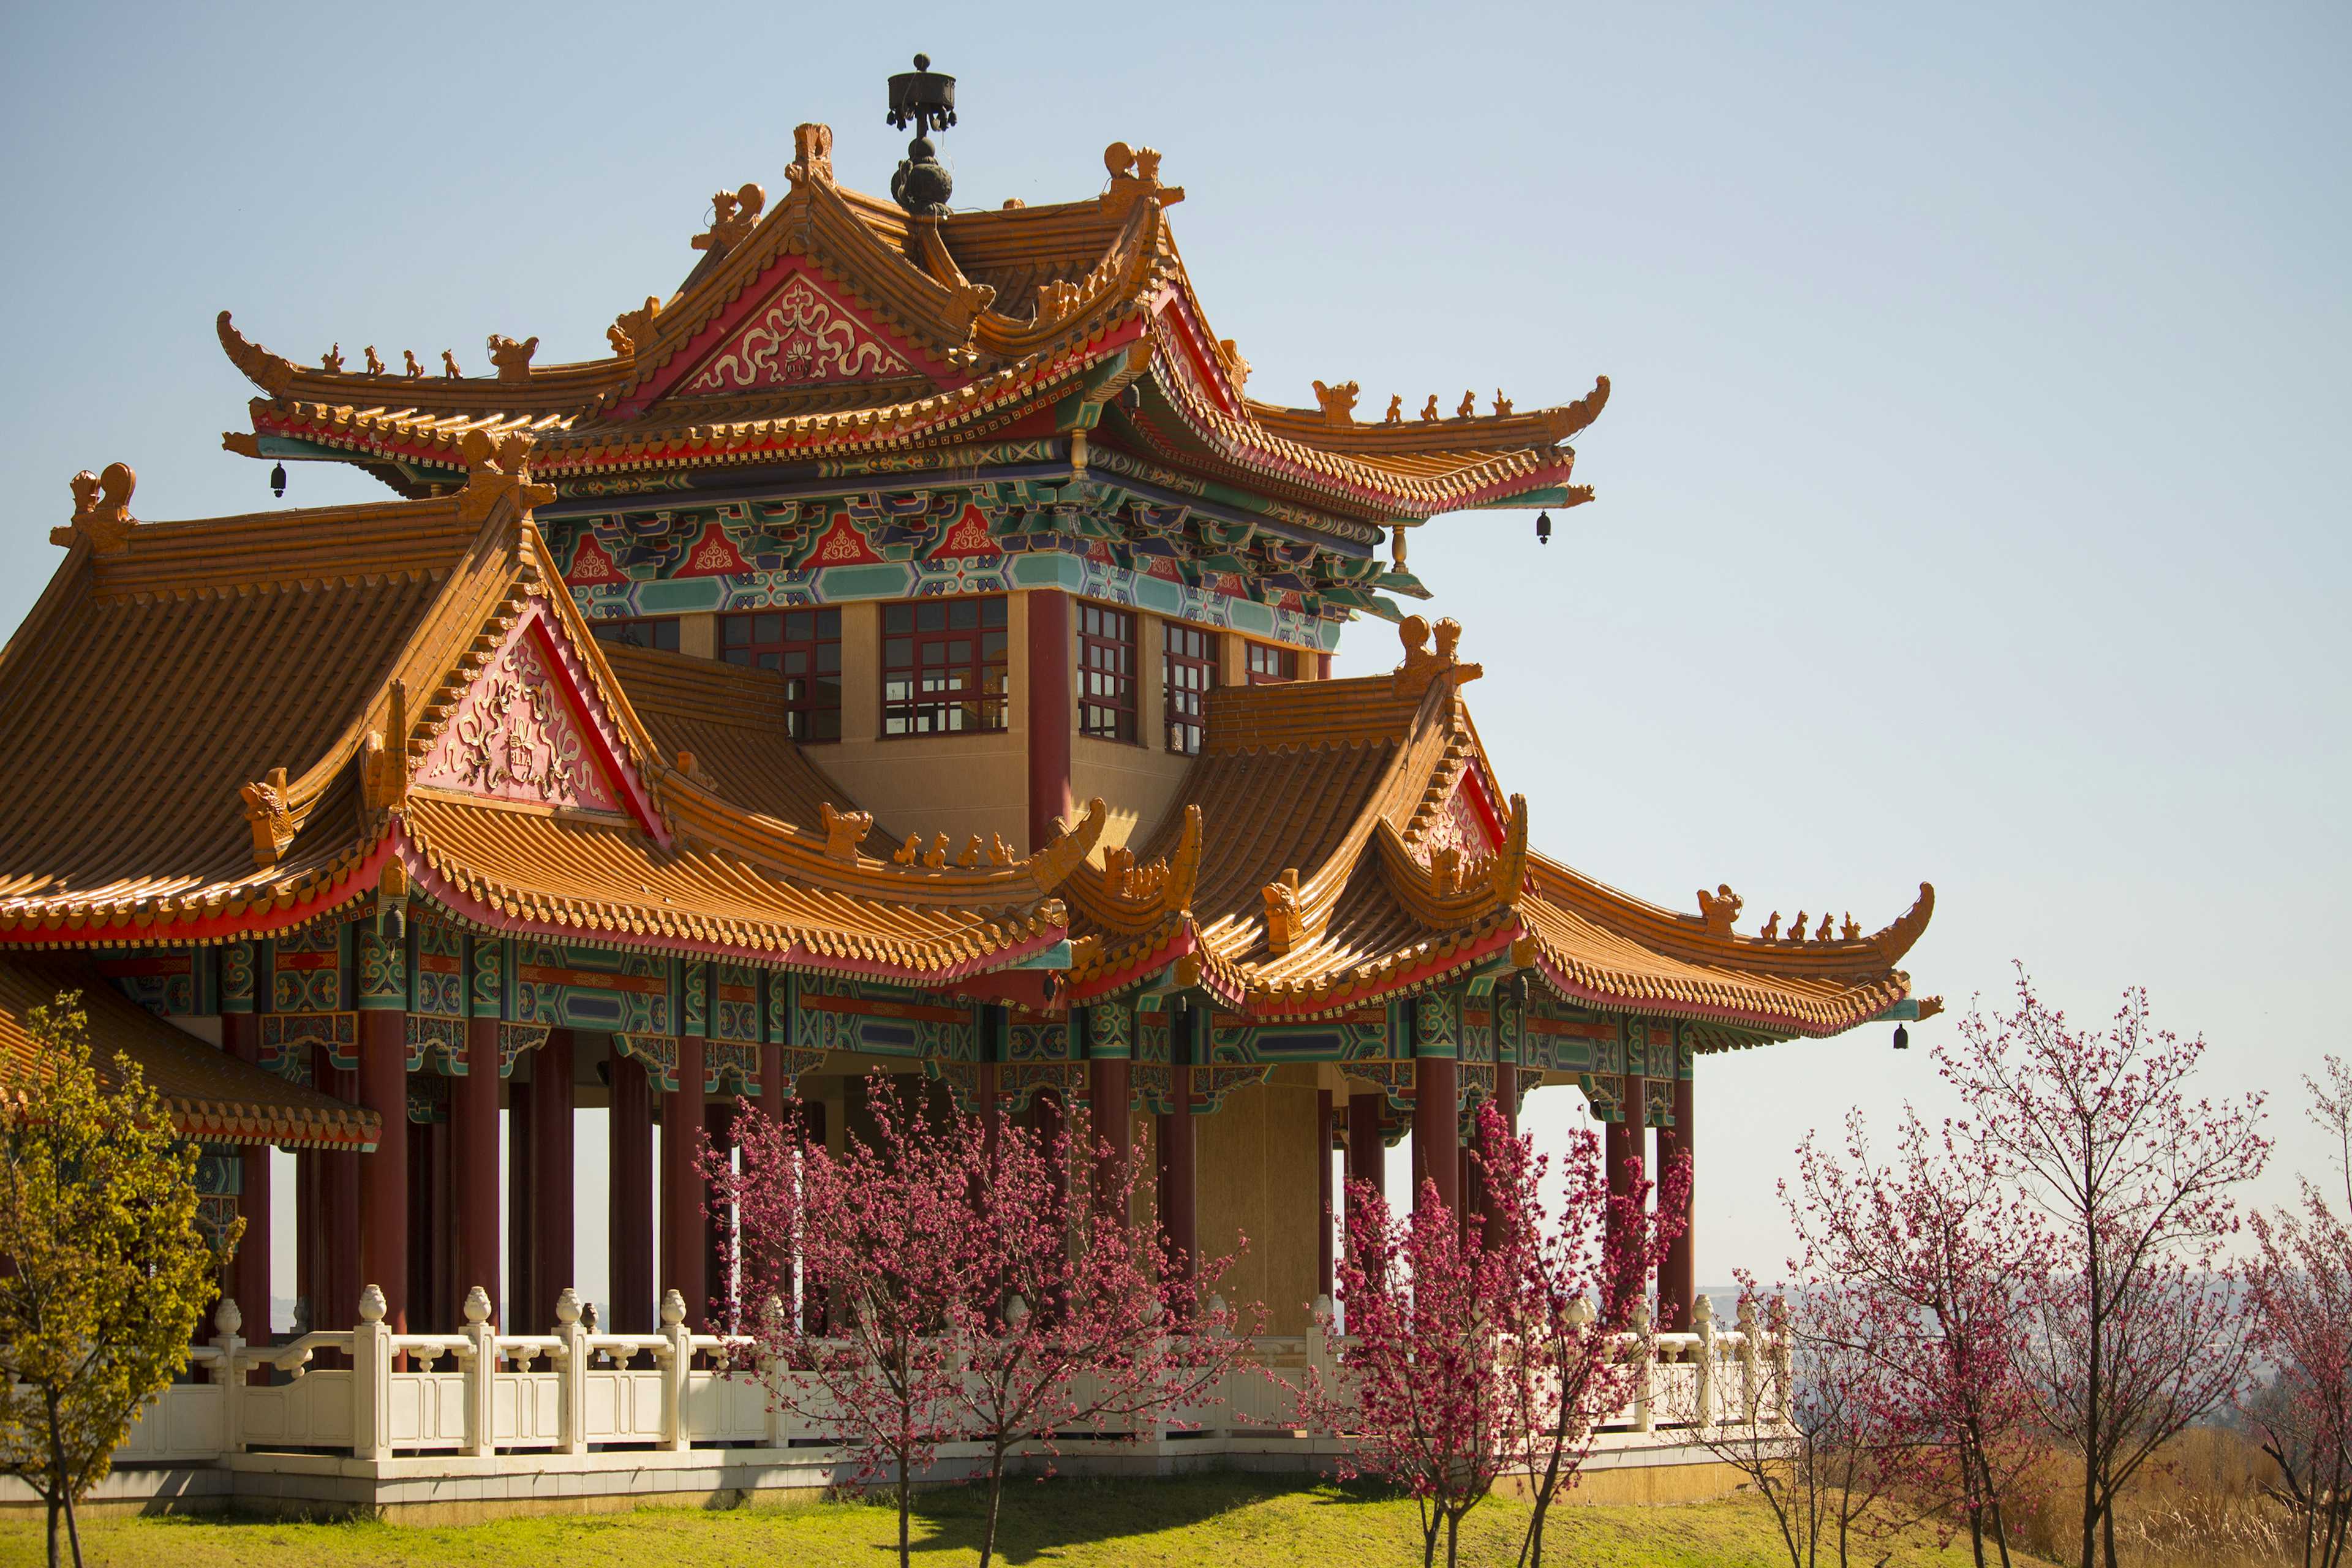 Nan Hua Temple